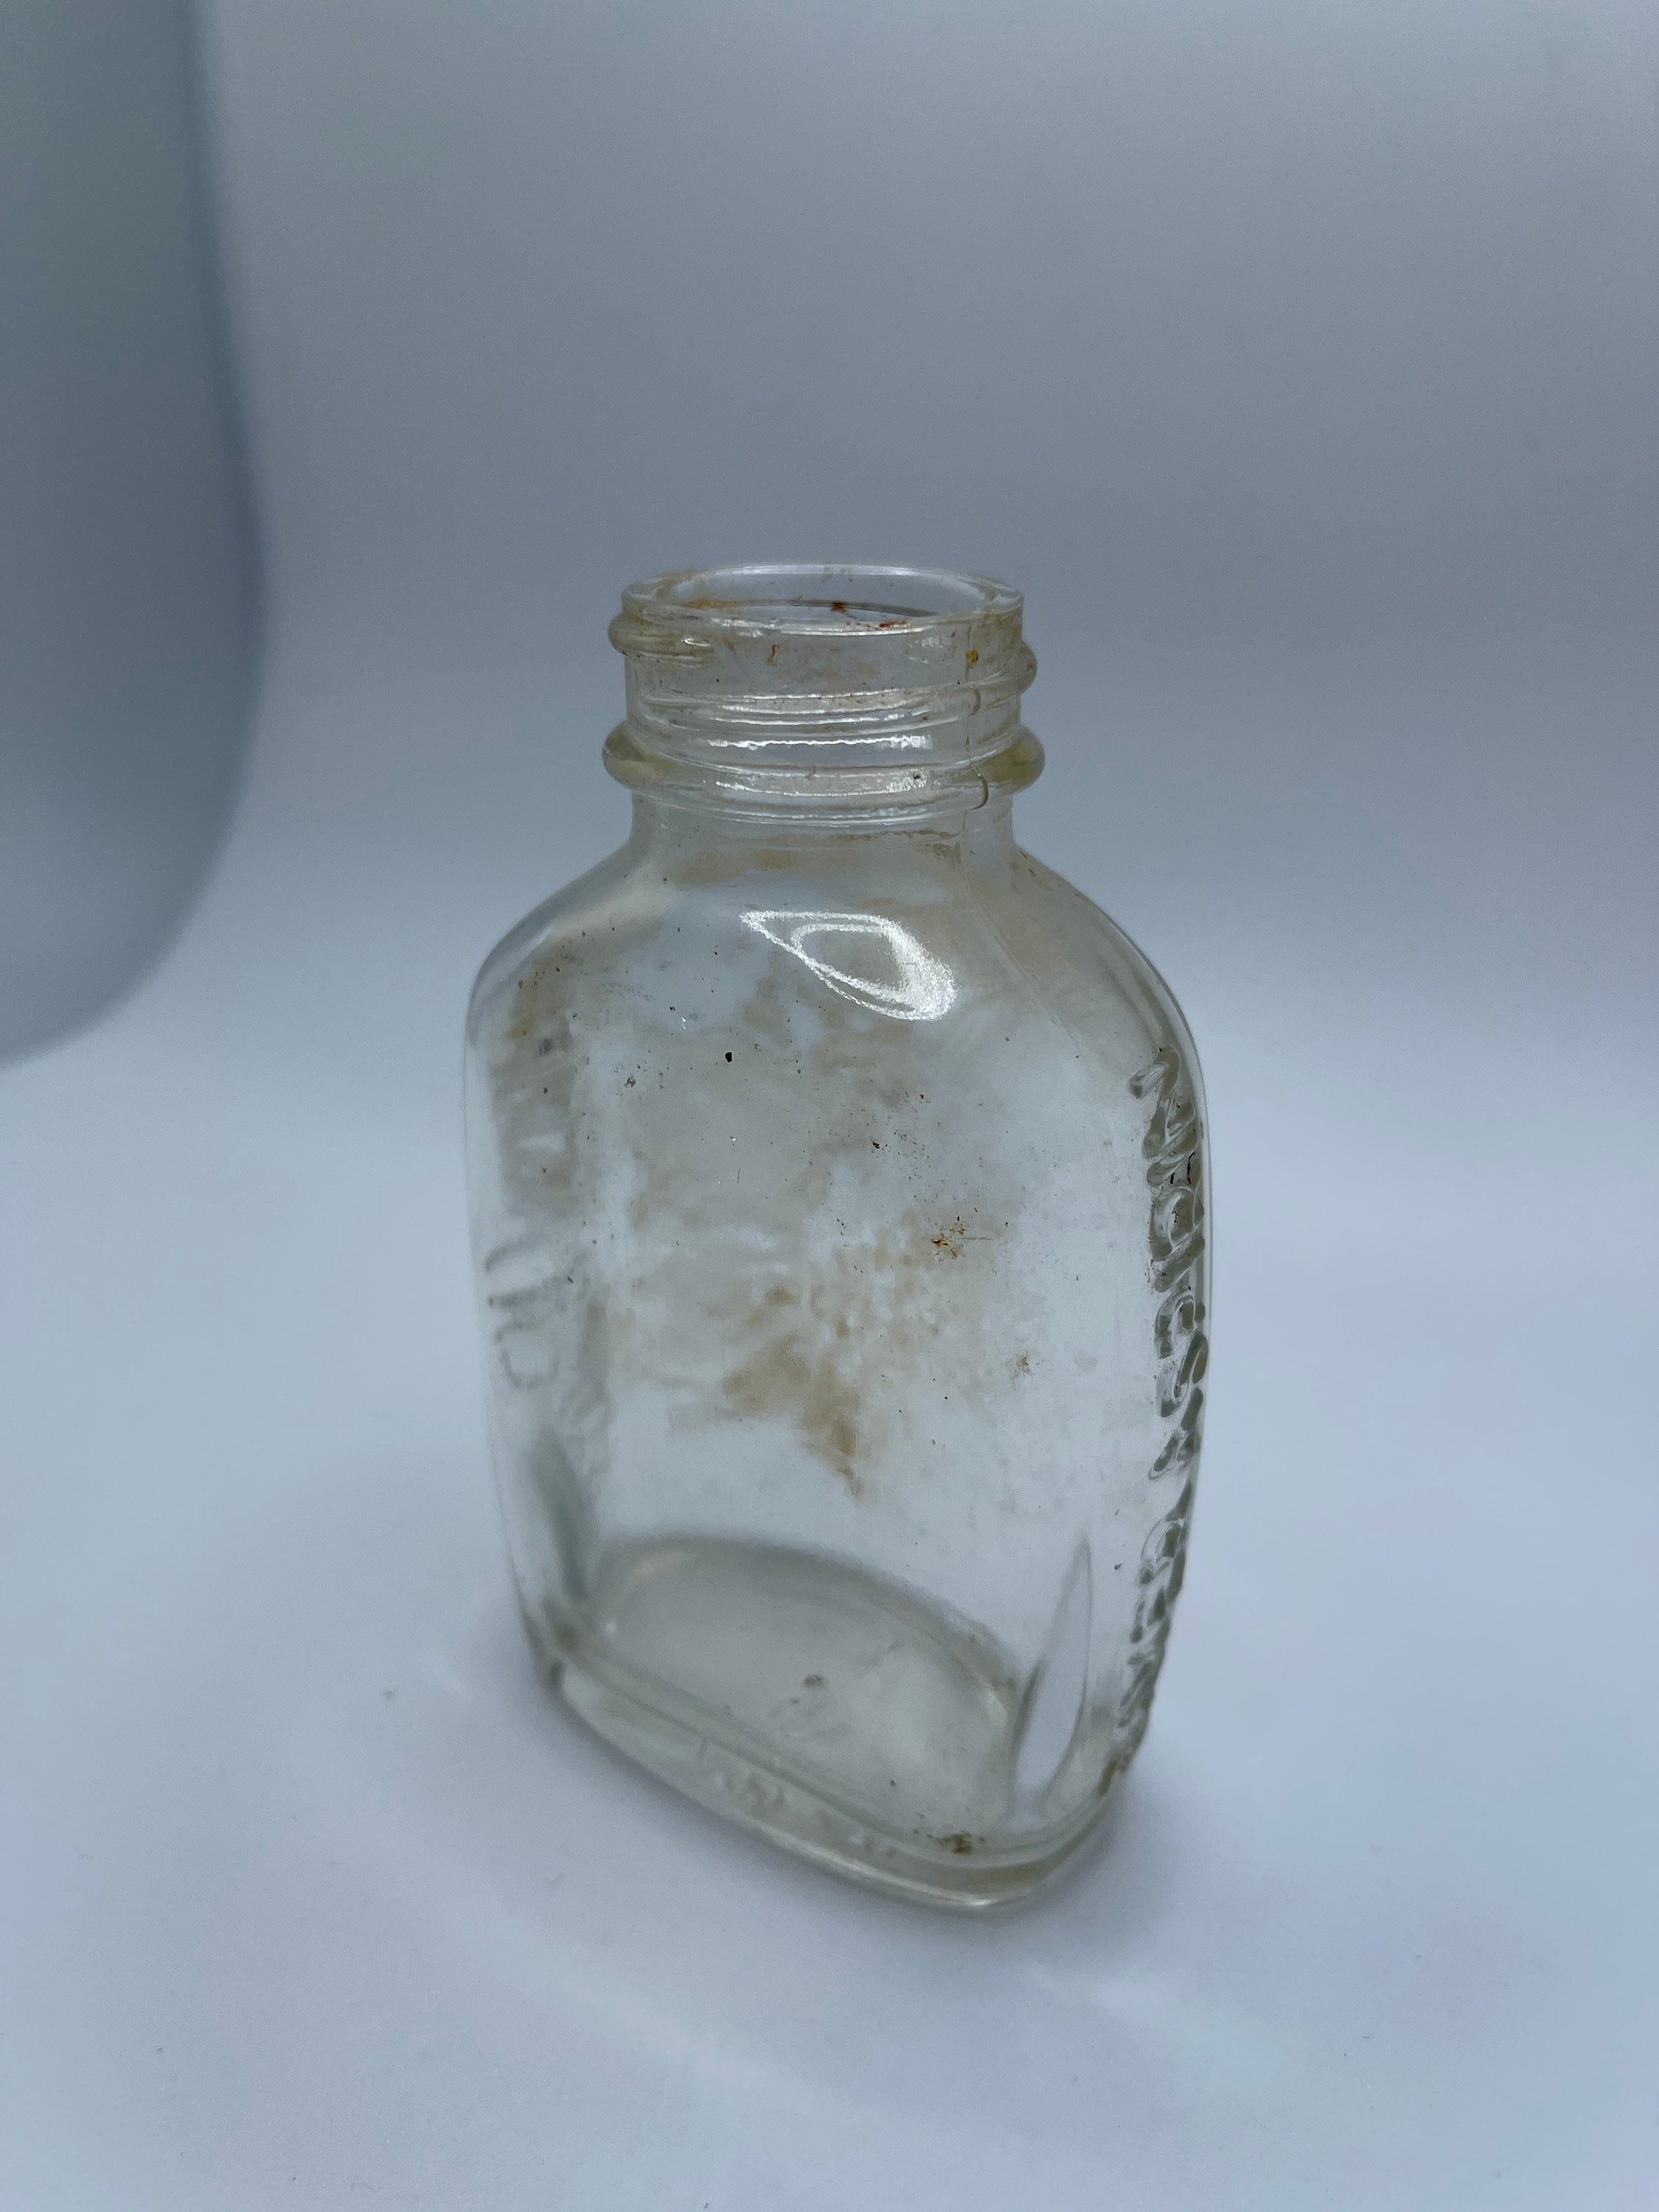 Bayer Aspirin Clear Glass Bottle, Vintage